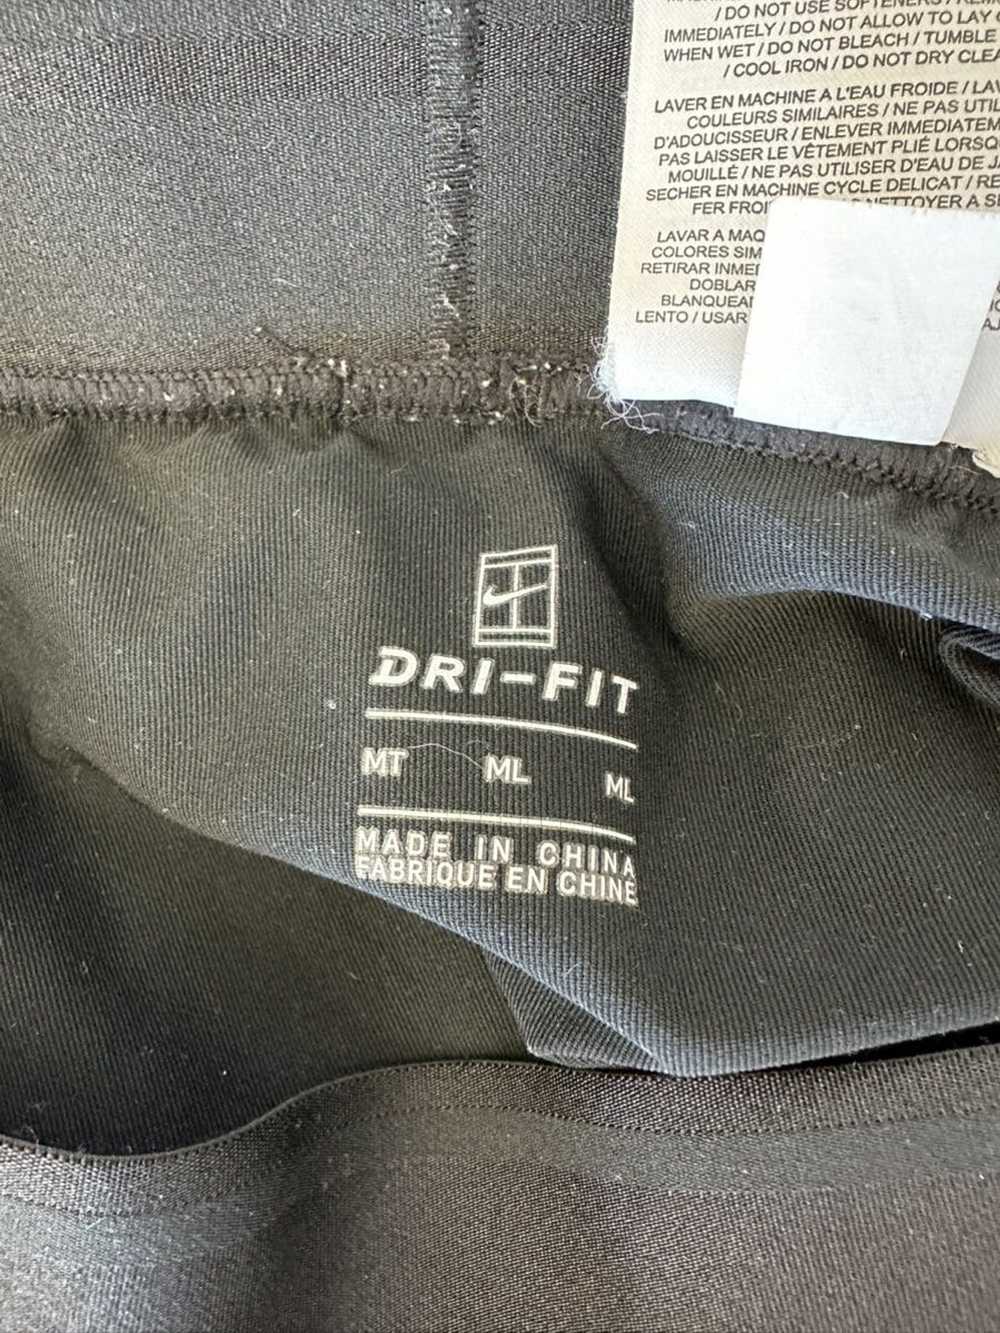 Nike Nike Dri-Fit Pleated Tennis Skirt - image 3